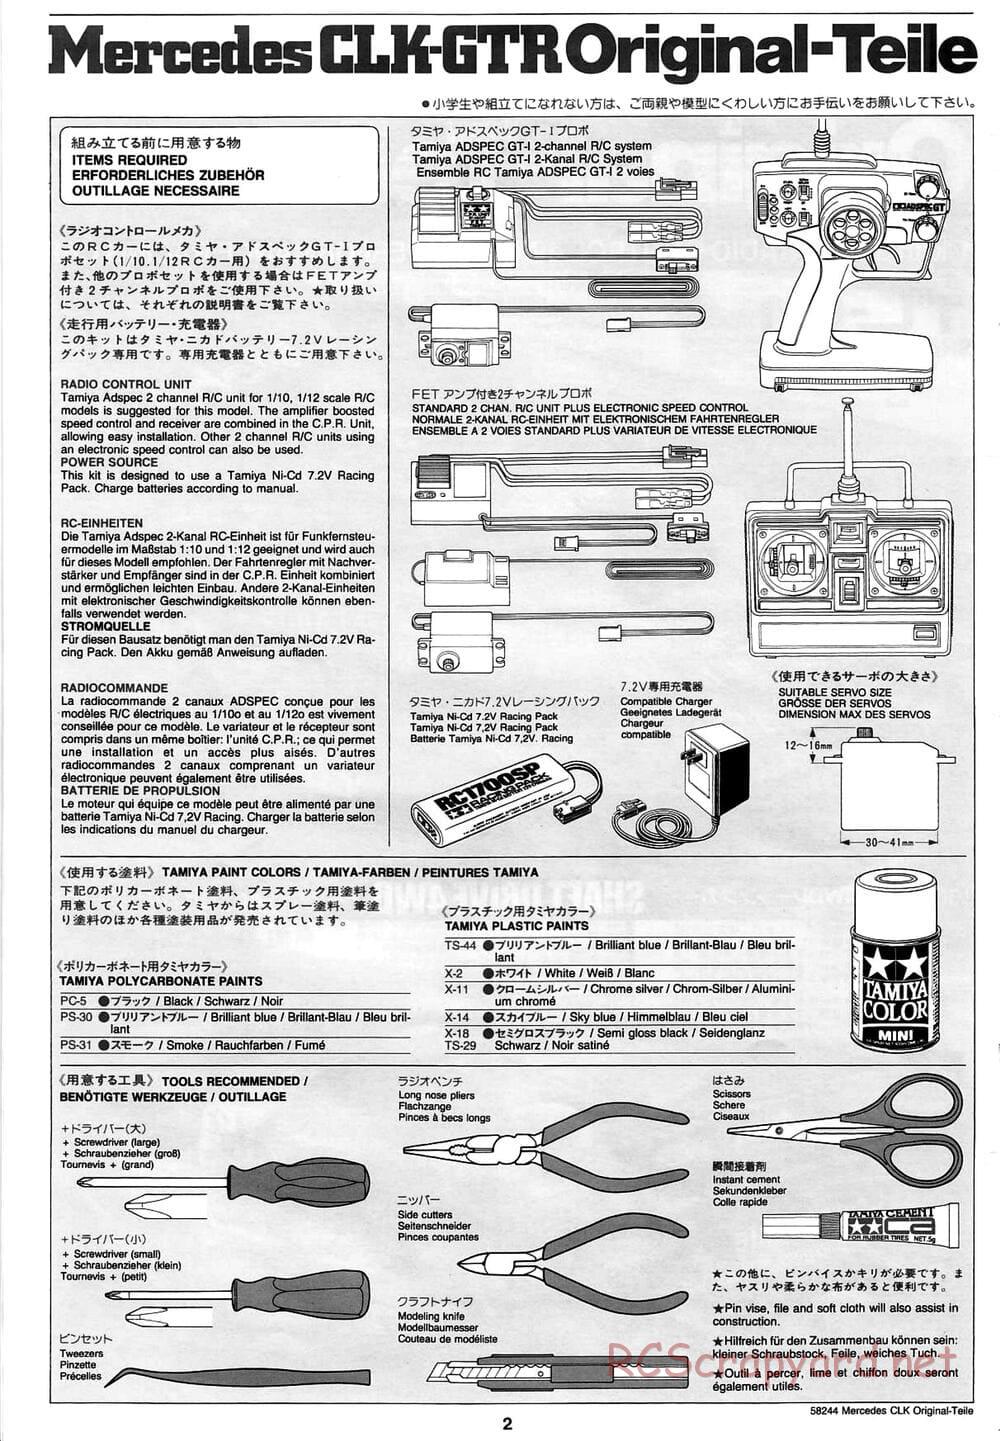 Tamiya - Mercedes CLK-GTR Original-Teile - TL-01 Chassis - Manual - Page 2